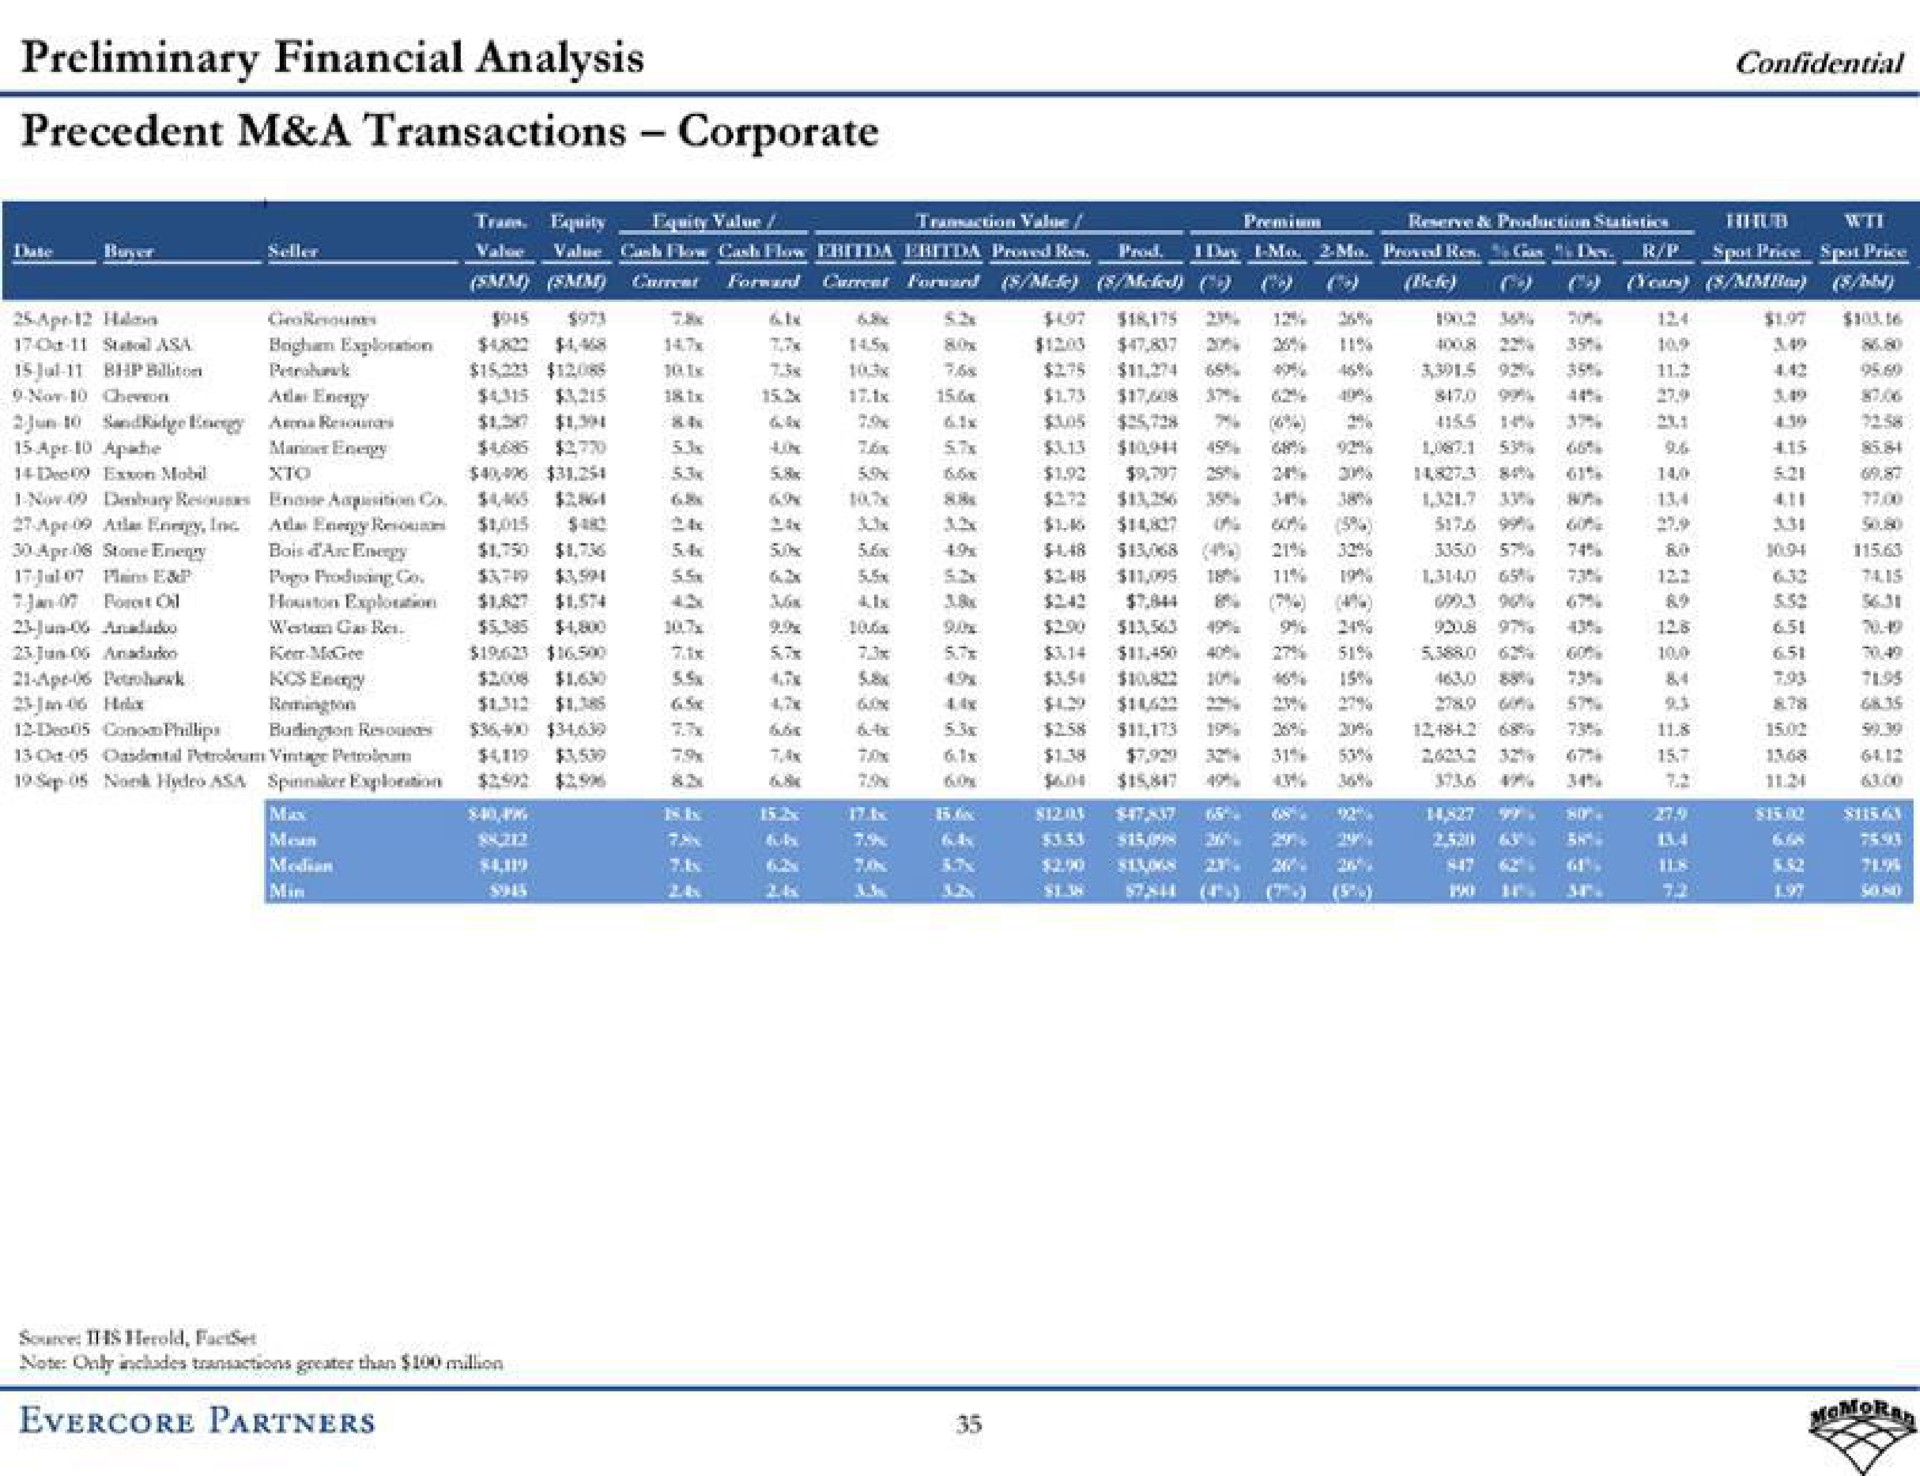 preliminary financial analysis precedent a transactions corporate confidential | Evercore